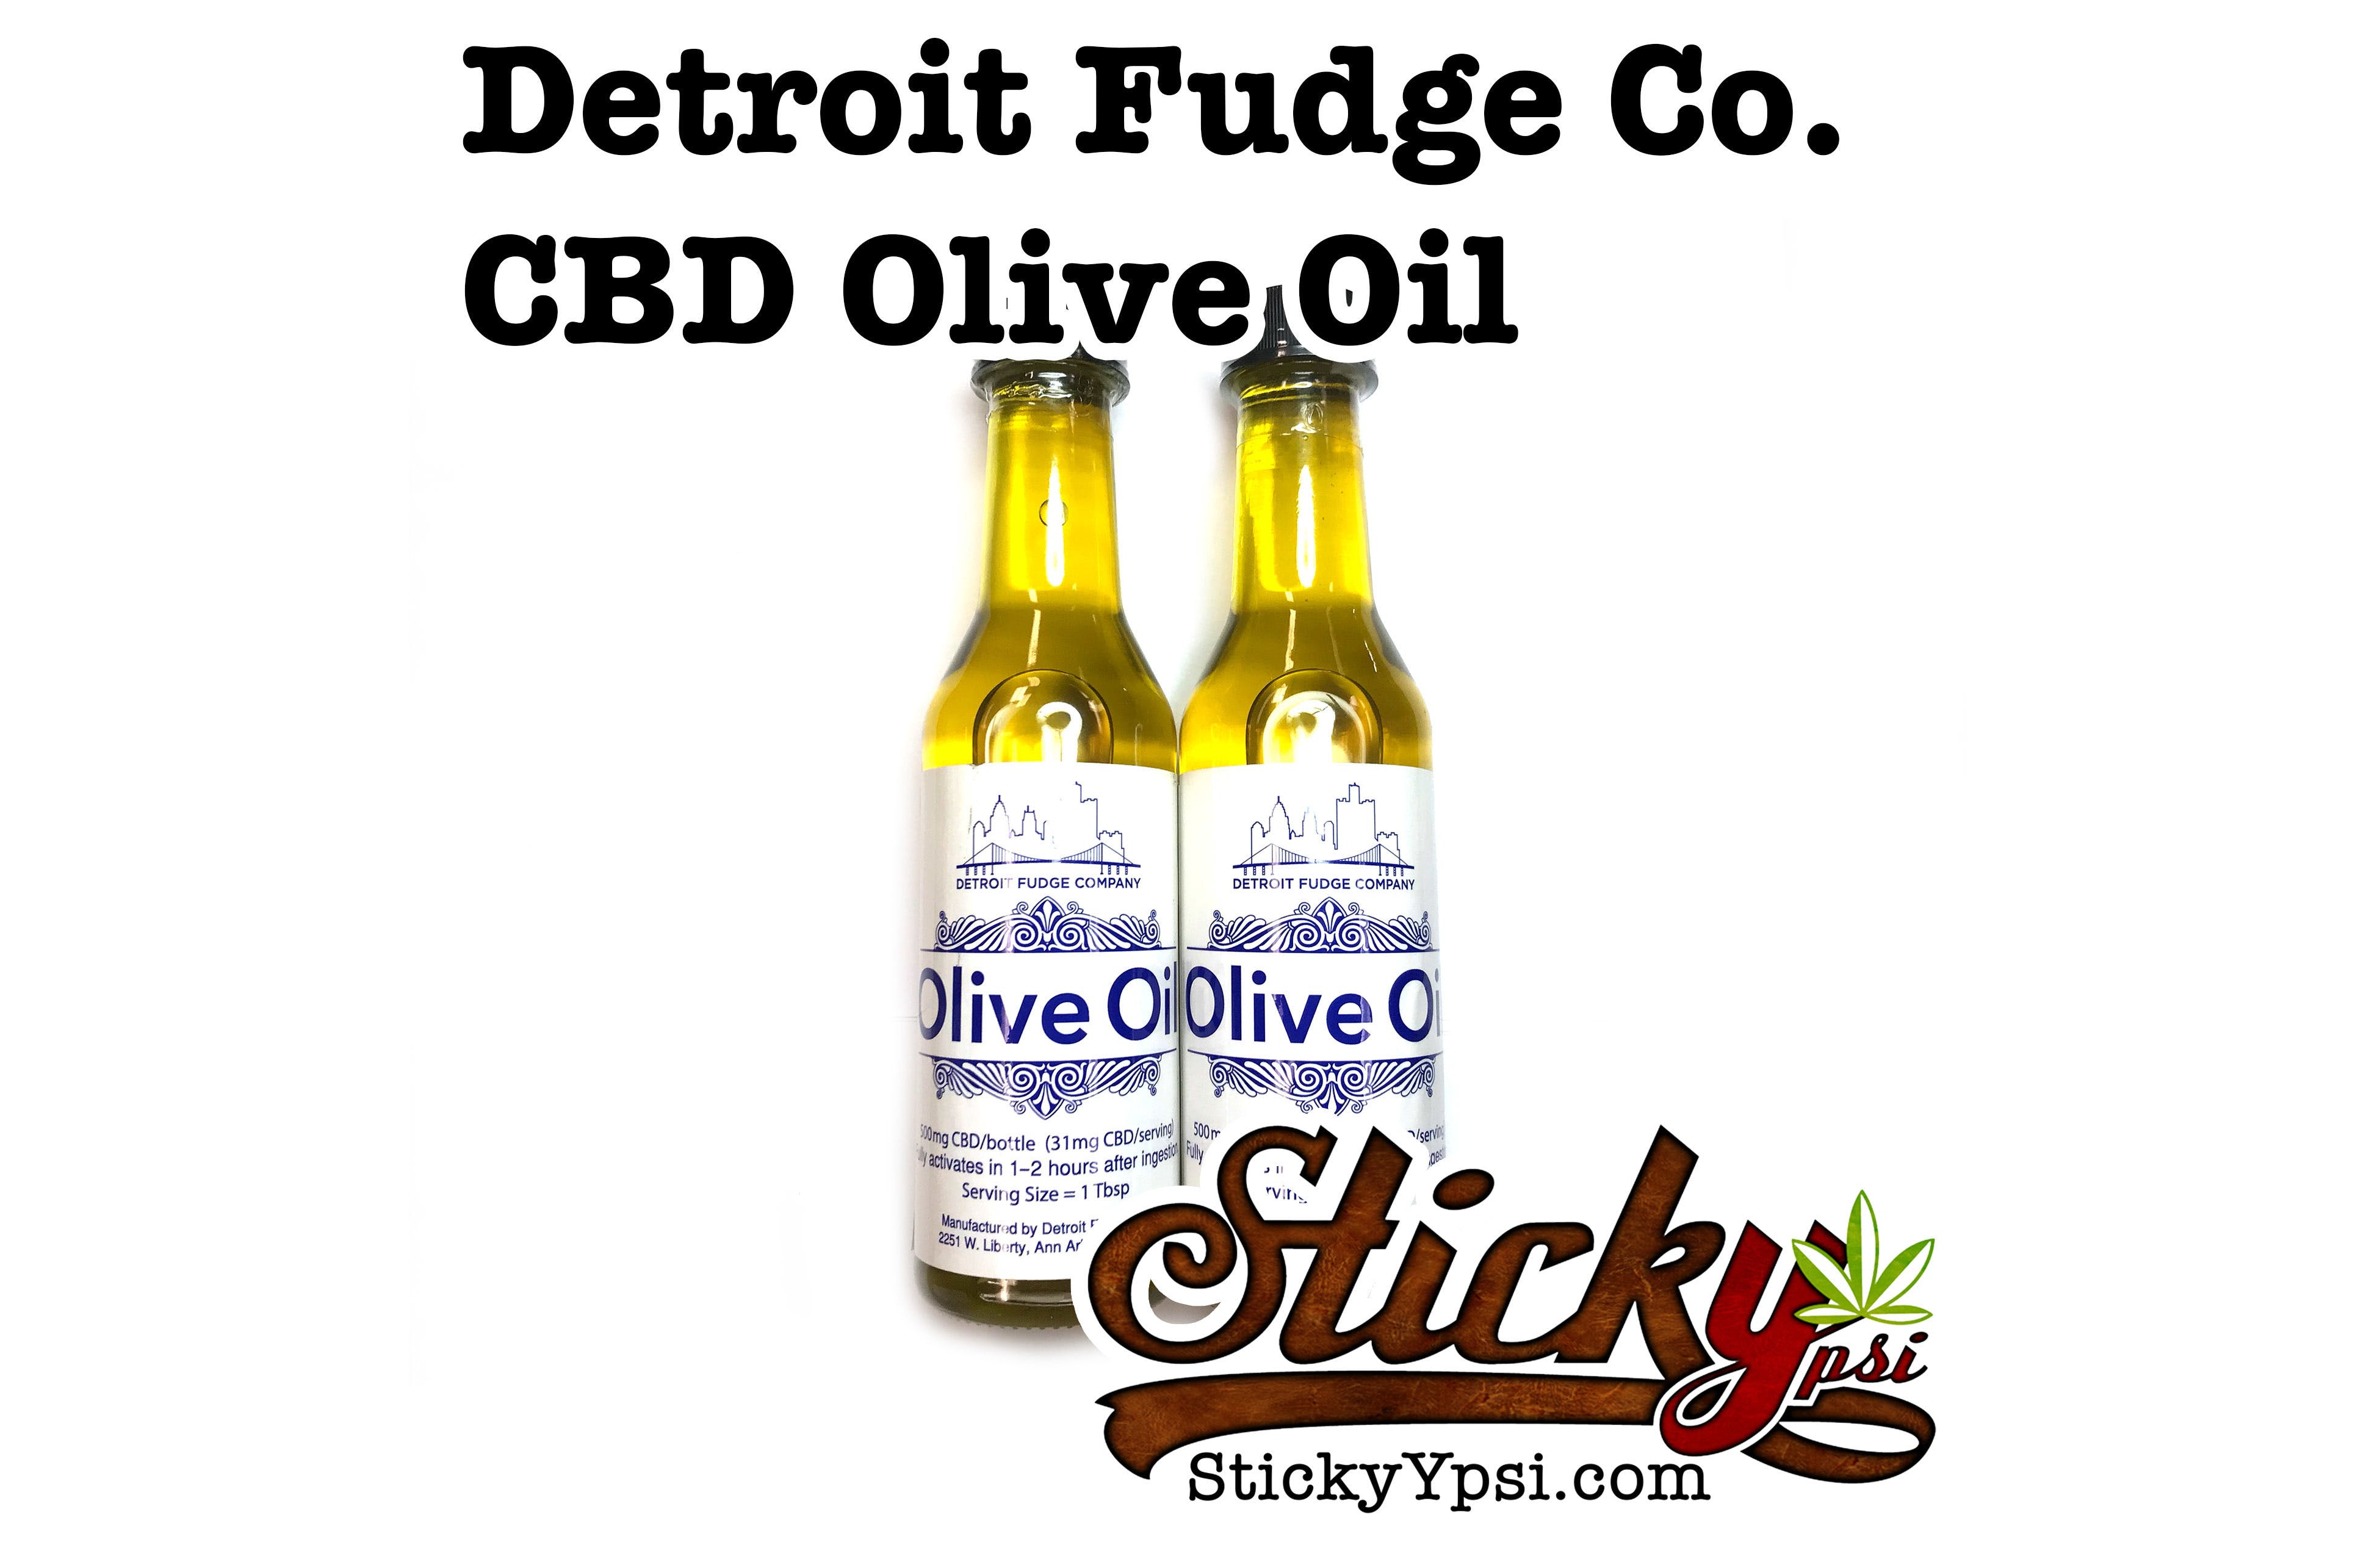 edible-detroit-fudge-co-200mg-cbd-olive-oil